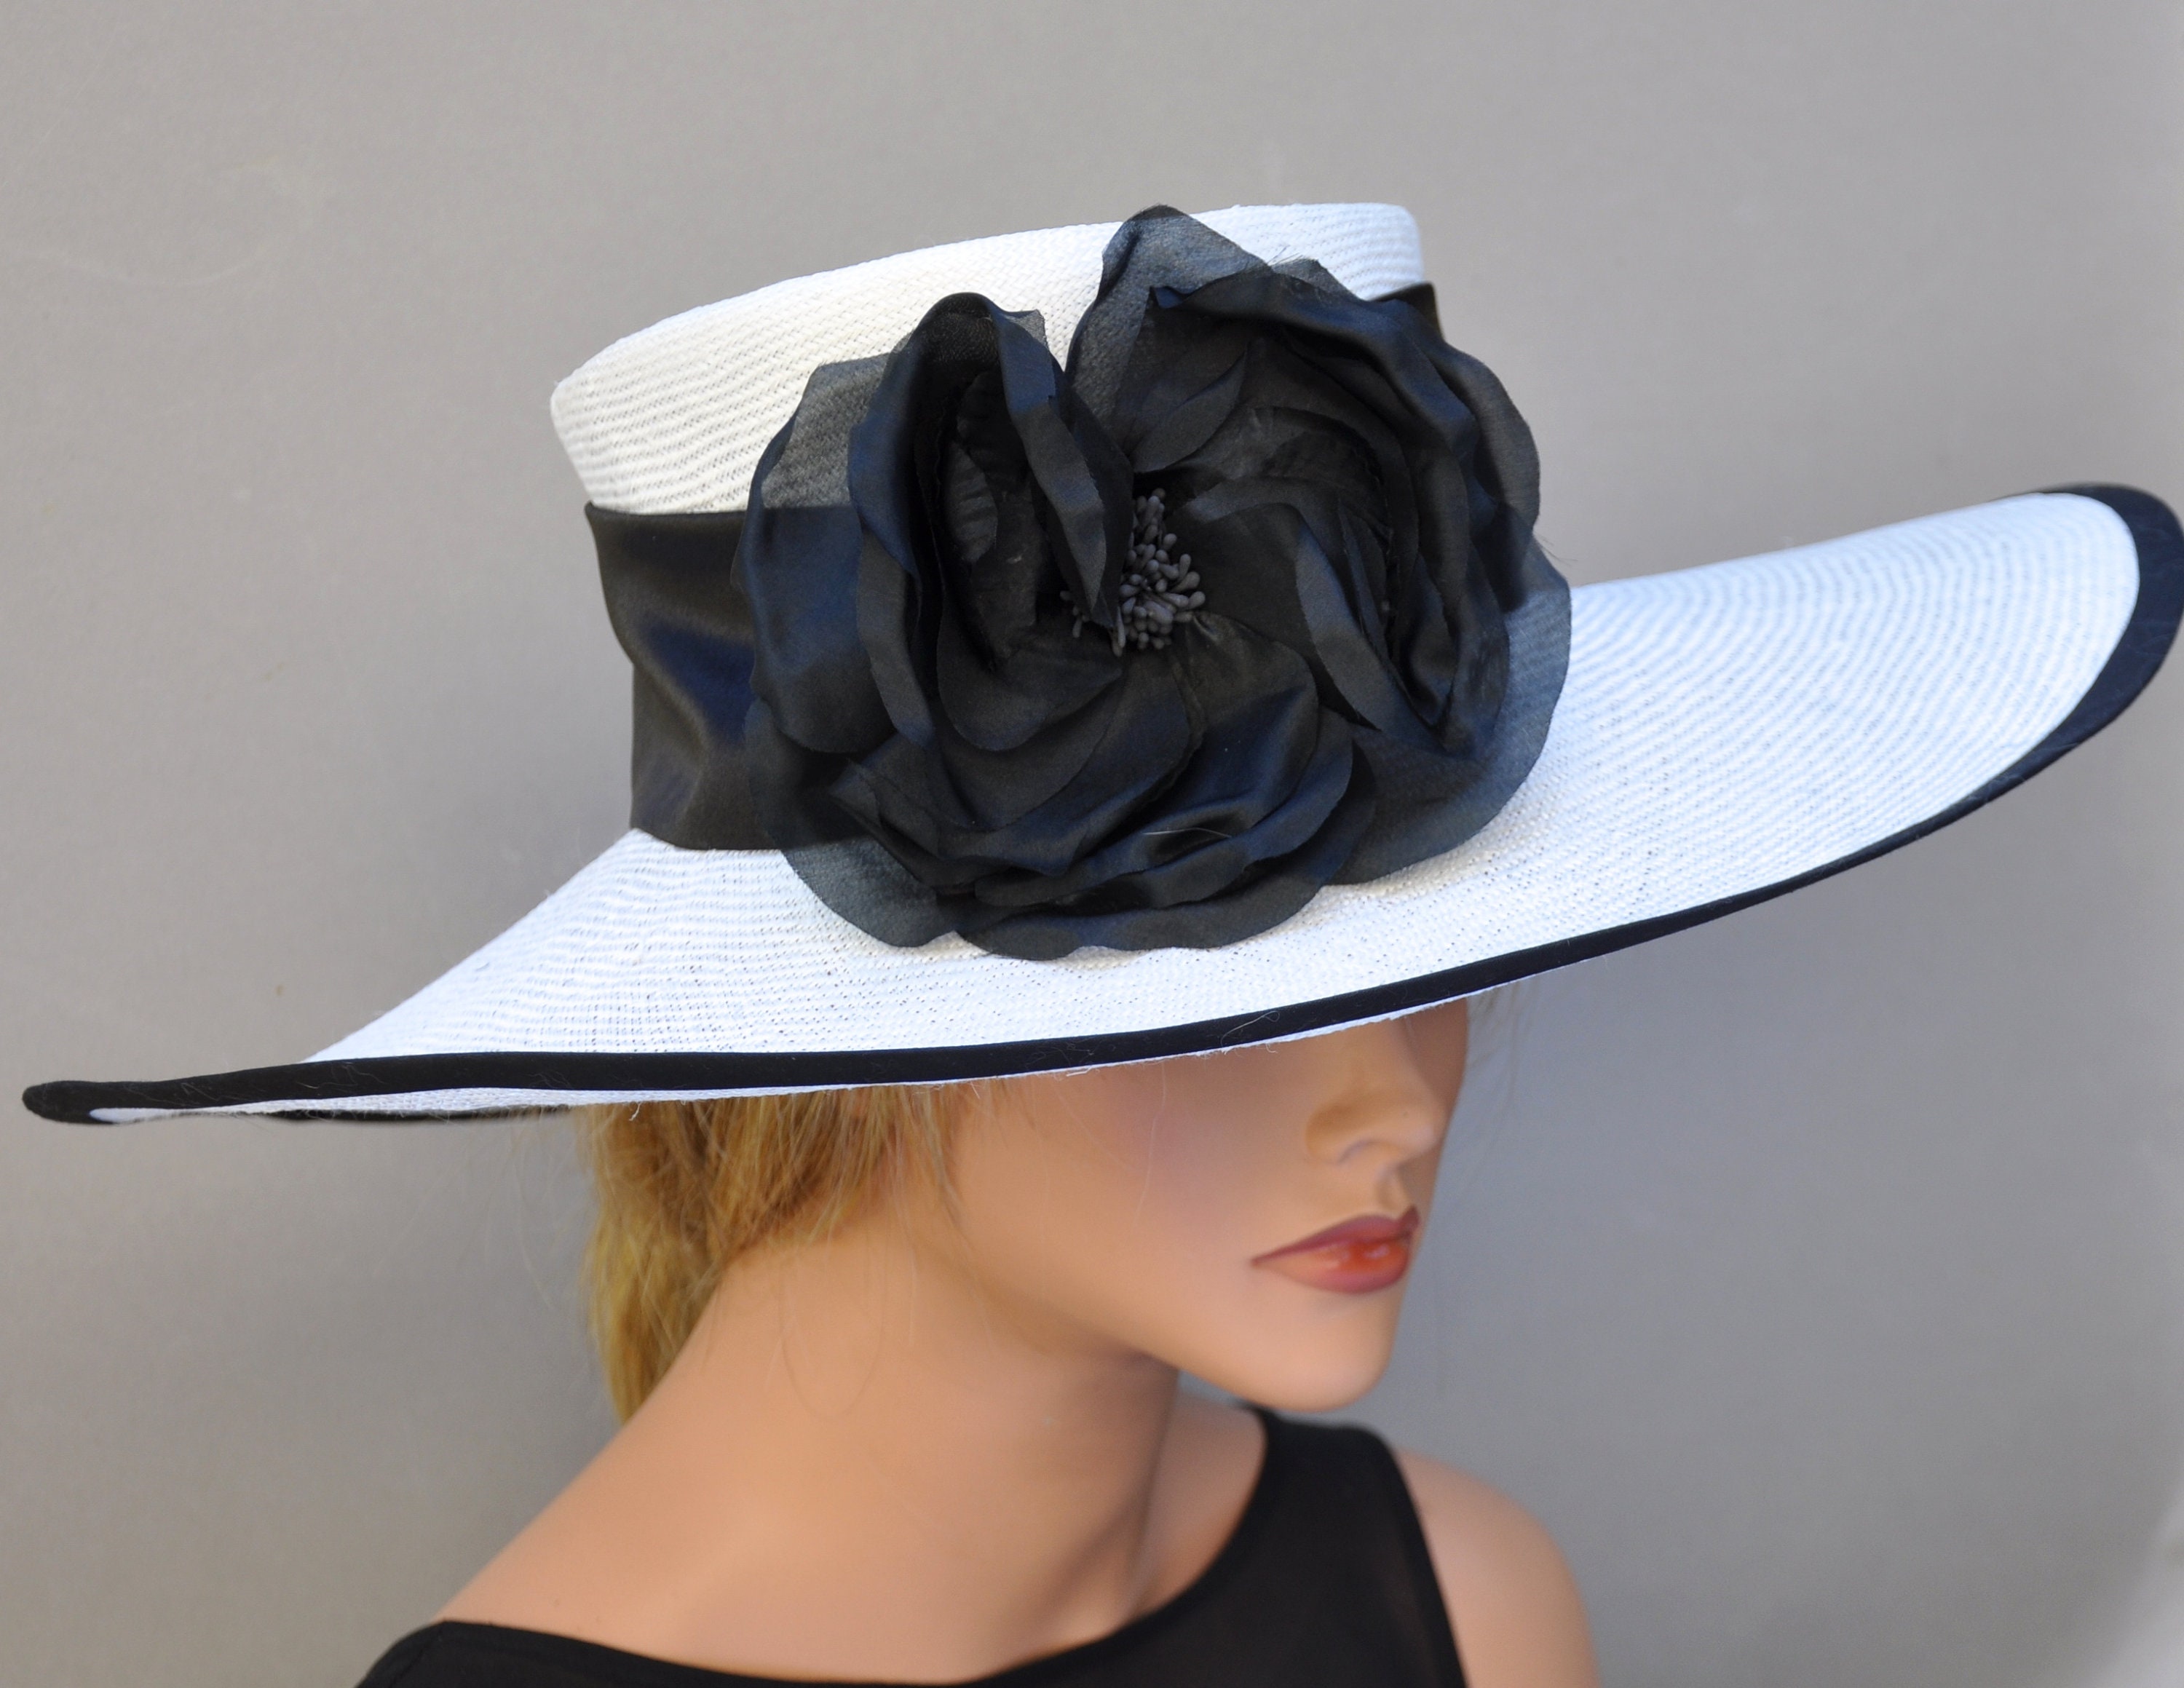 Танцевальная шляпа. Черная шляпка женская. Черная женская шляпа. Черные элегантные шляпки. Широкополая черная шляпа.